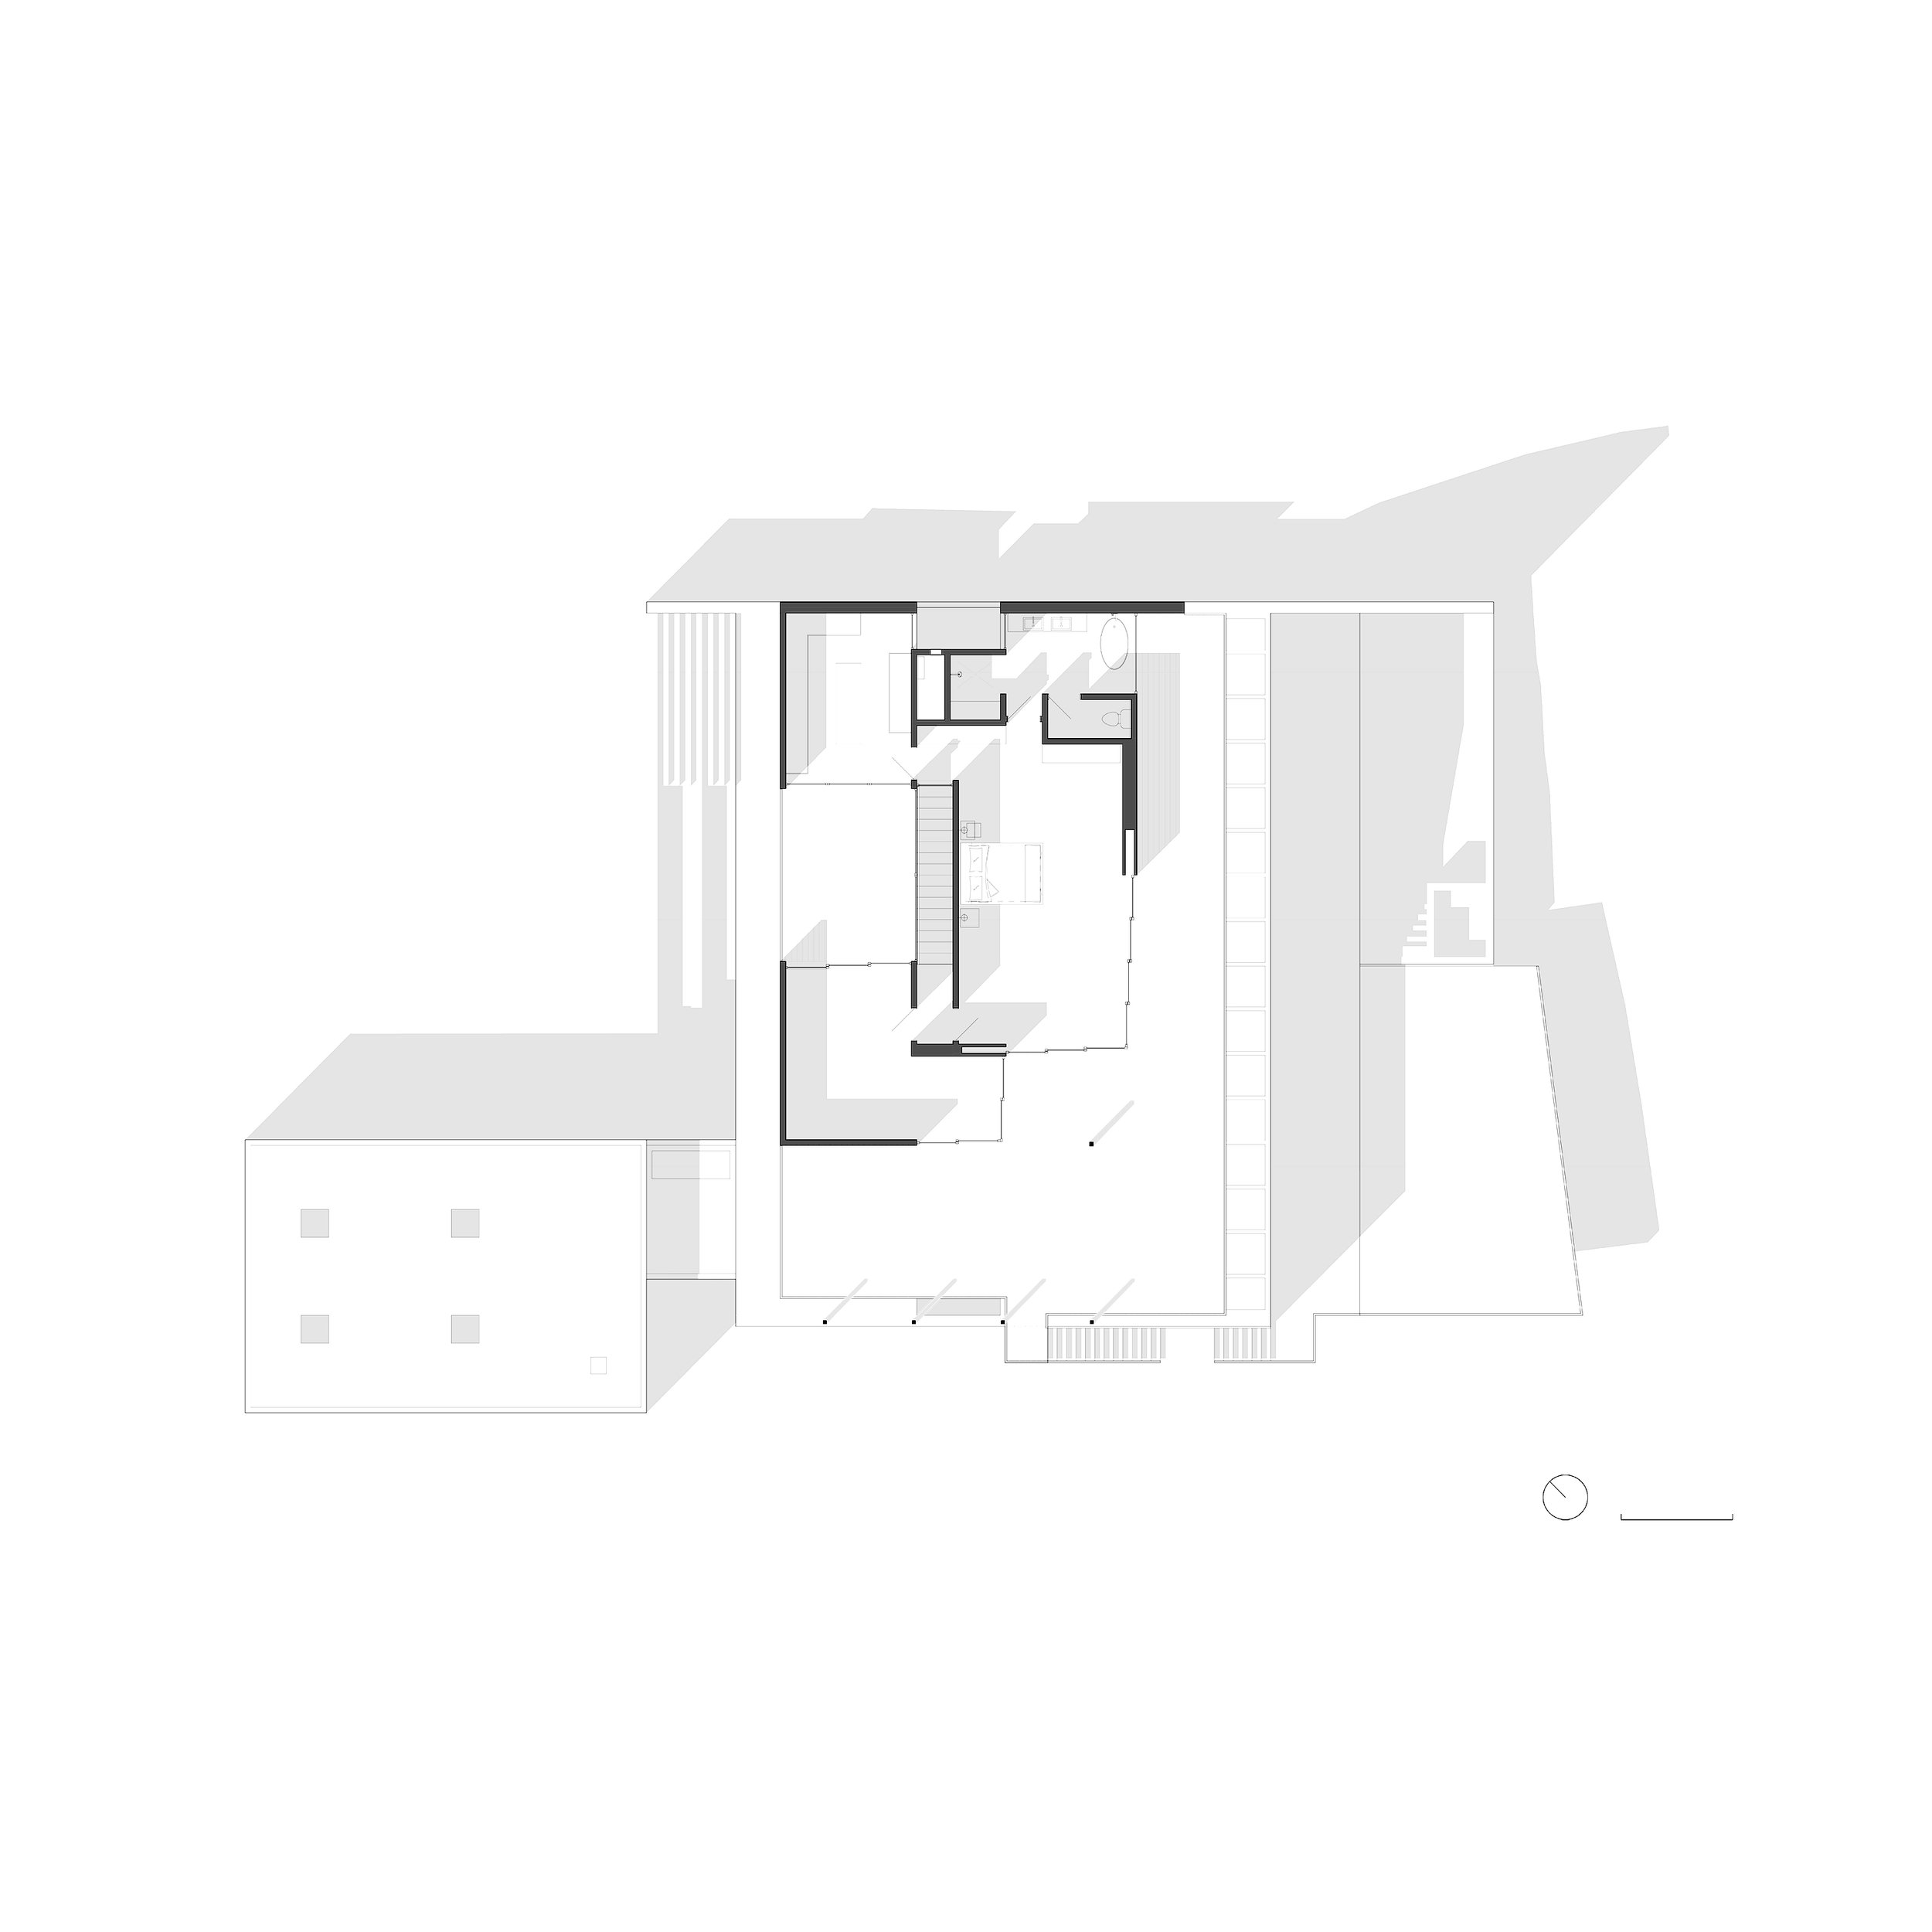 FHR_Second Floor Plan - Shadows_small.jpg